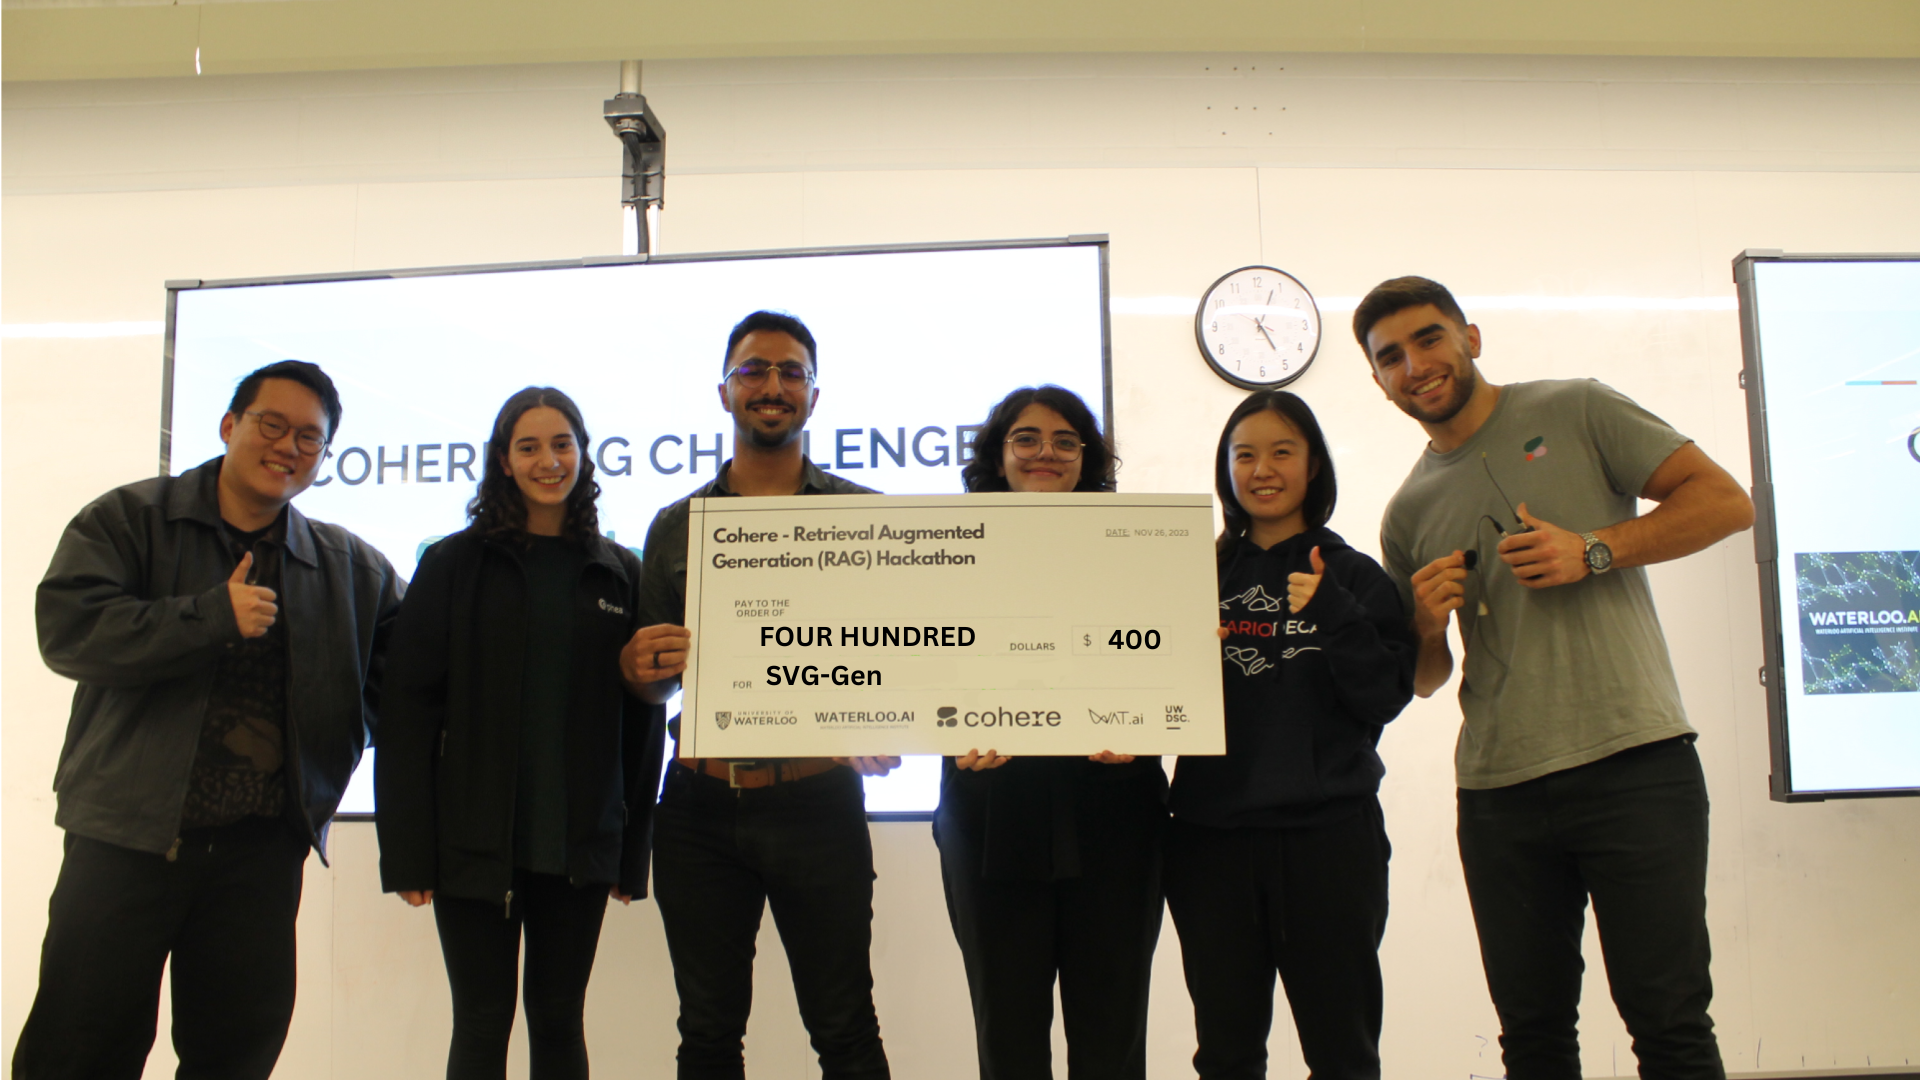 The SVG-gen team (L-R: Olivia Markham, Ali Shariatmadari, Paniz Ojaghi, Jillian Xu) holding a $400 cheque, flanked by Ivan Zhang and Faraz Khoubsirat